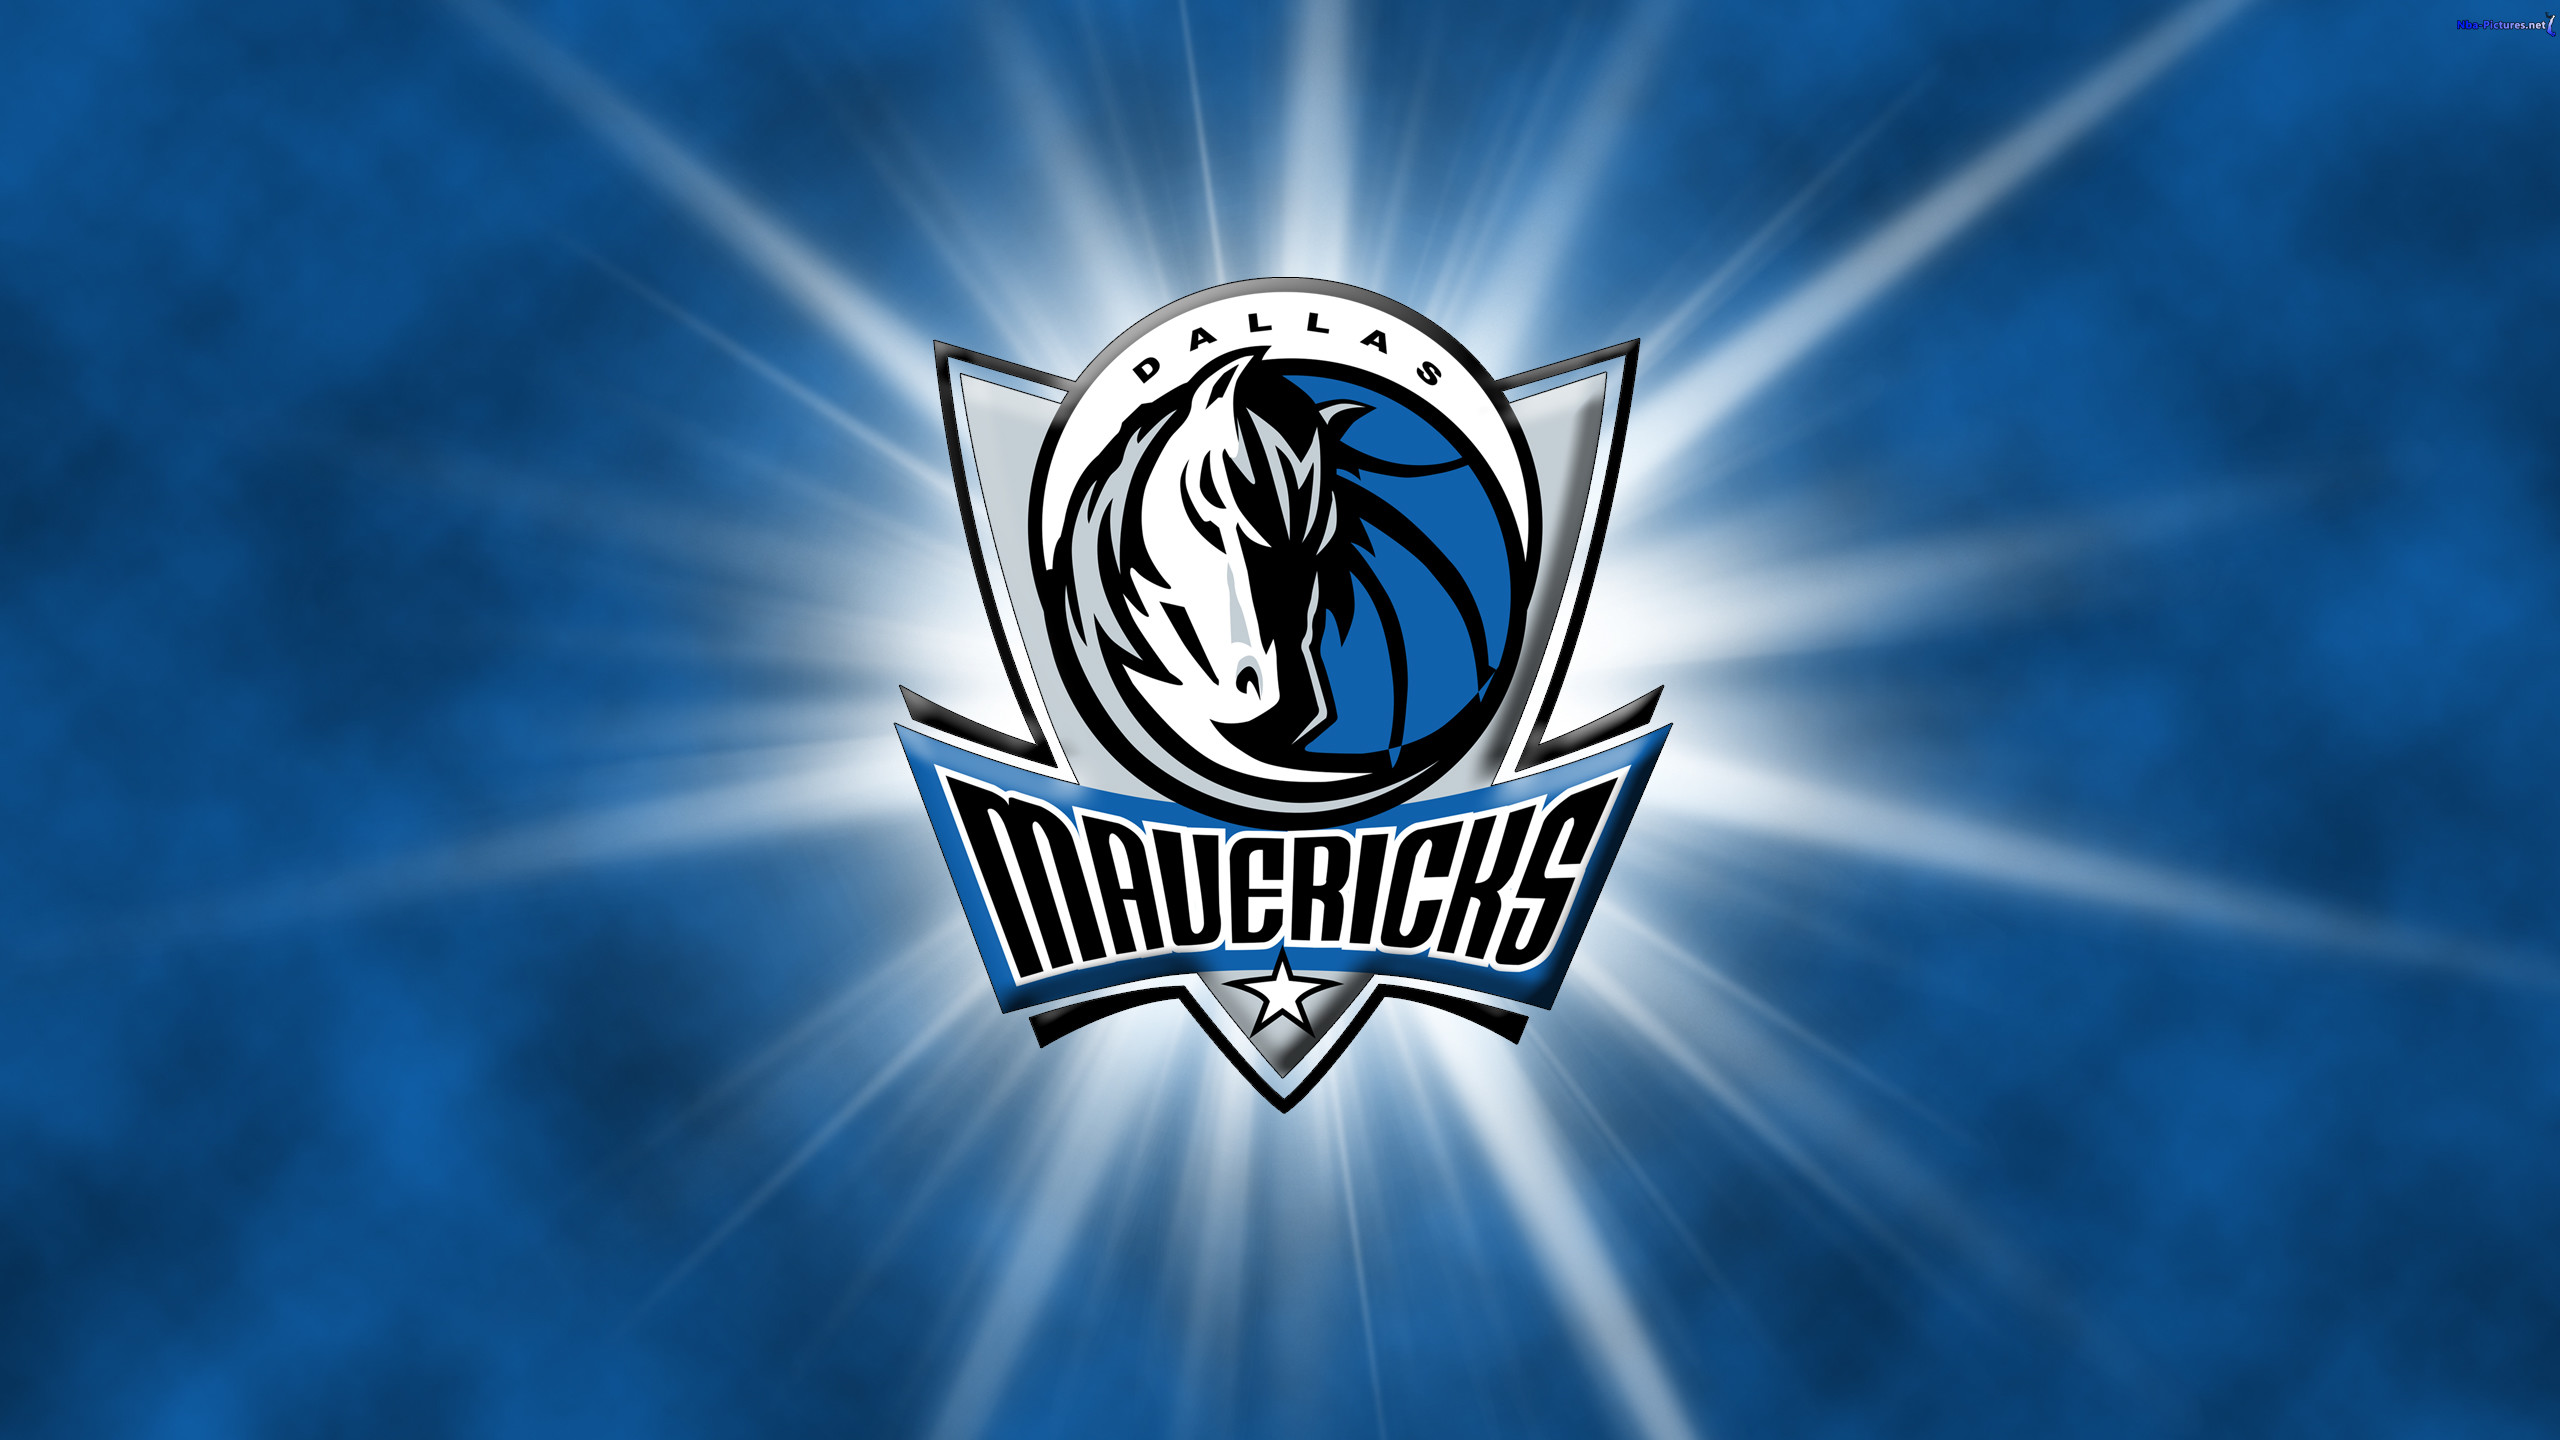 Dallas Mavericks vs. Minnesota Timberwolves Tickets, Dallam, Texas, United States